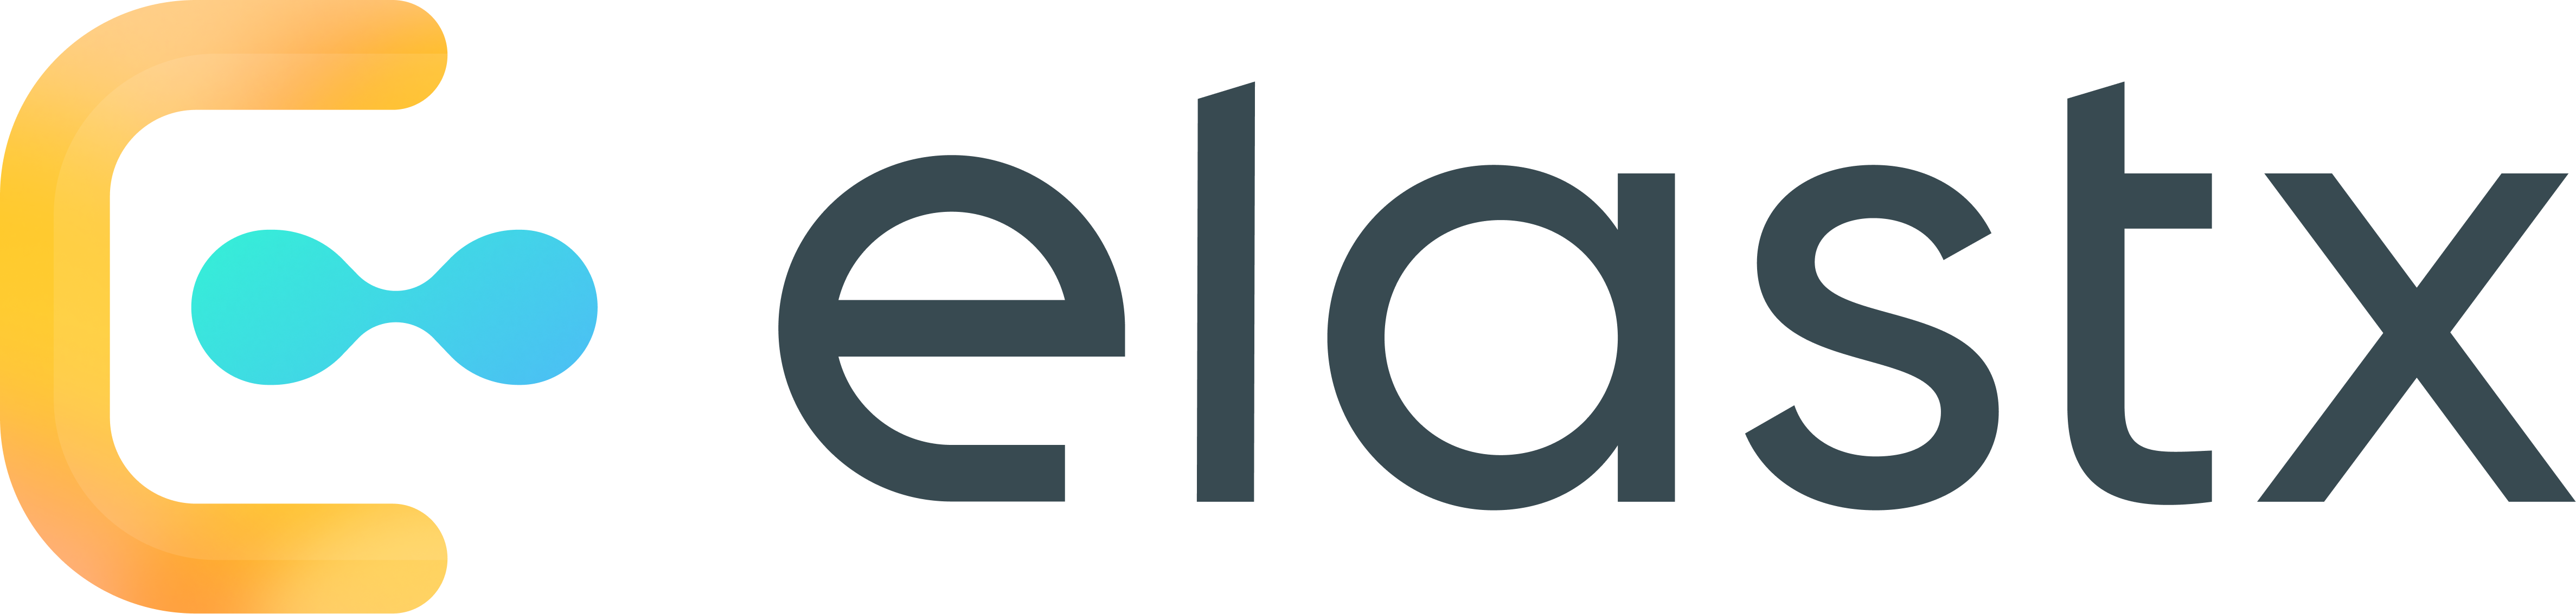 Company logo for Elastx